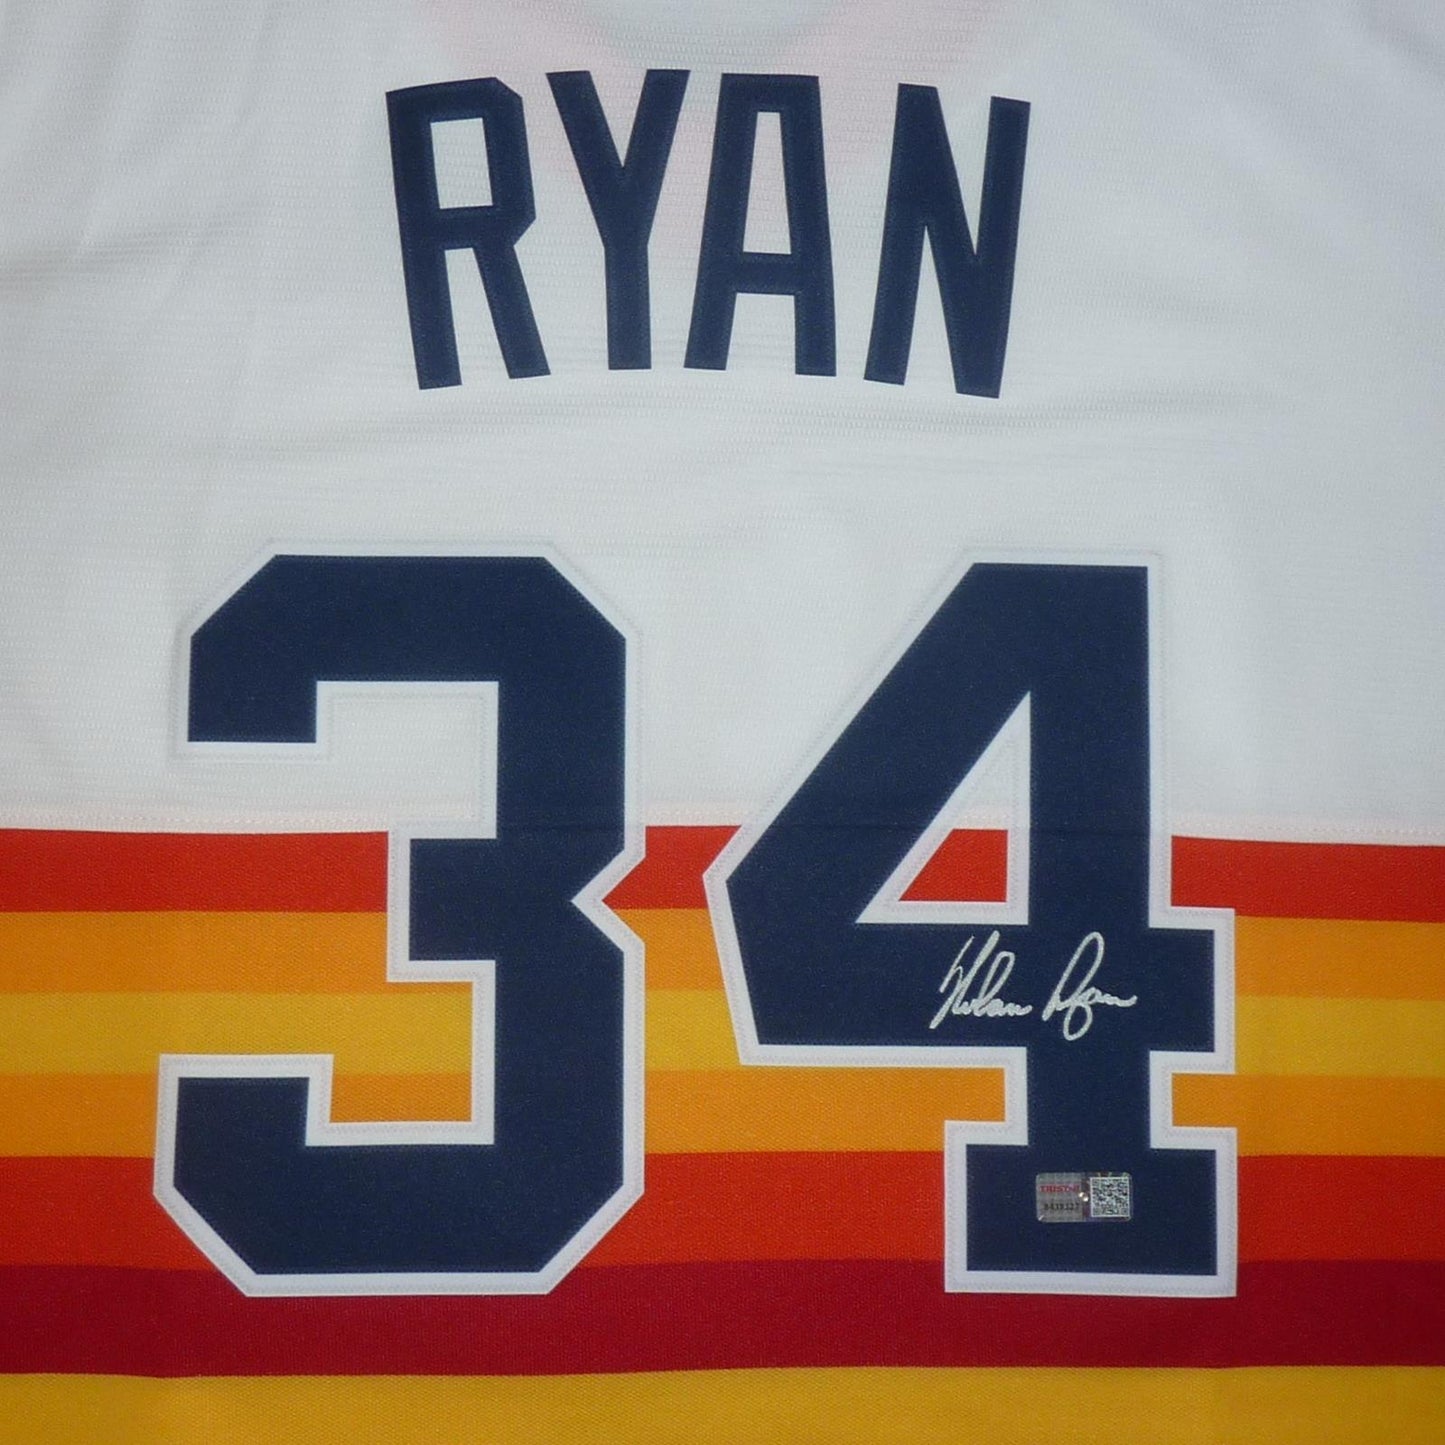 Nolan Ryan Autographed Houston Astros (Rainbow Throwback) Majestic Jersey - TriStar